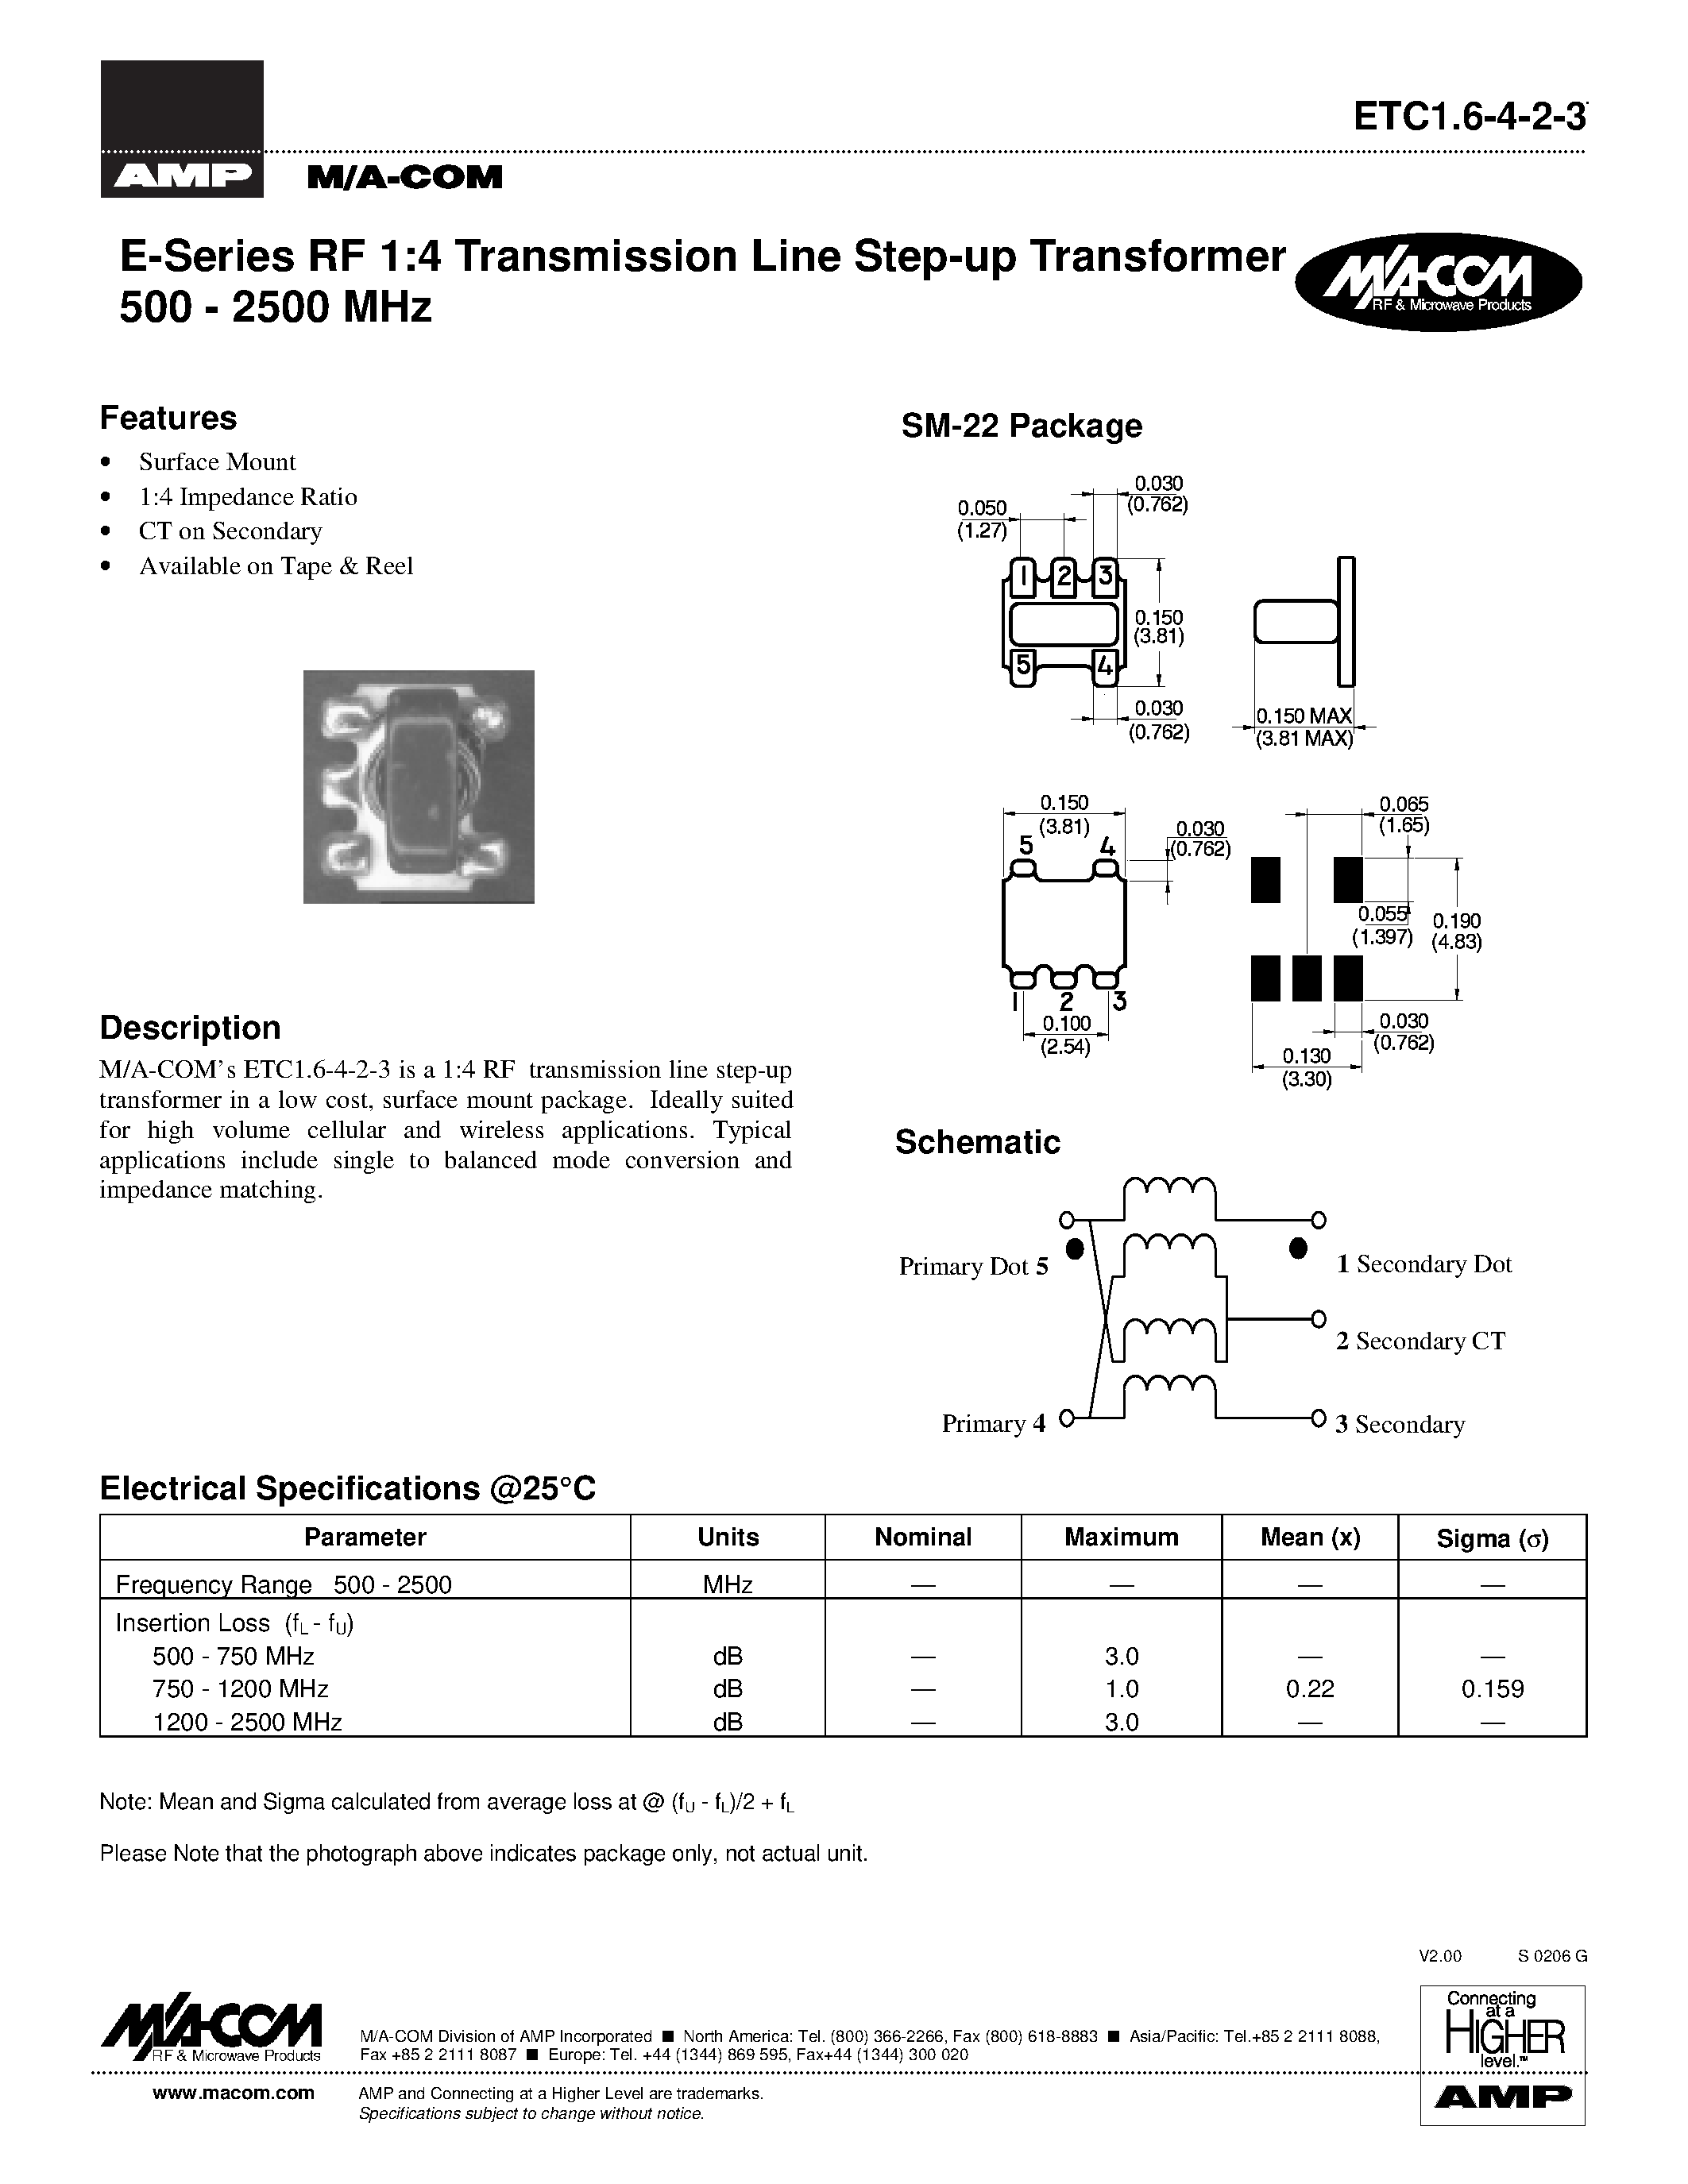 Даташит ETC16-4-2-3 - E-Series RF 1:4 Transmission Line Step-up Transformer 500 - 2500 MHz страница 1